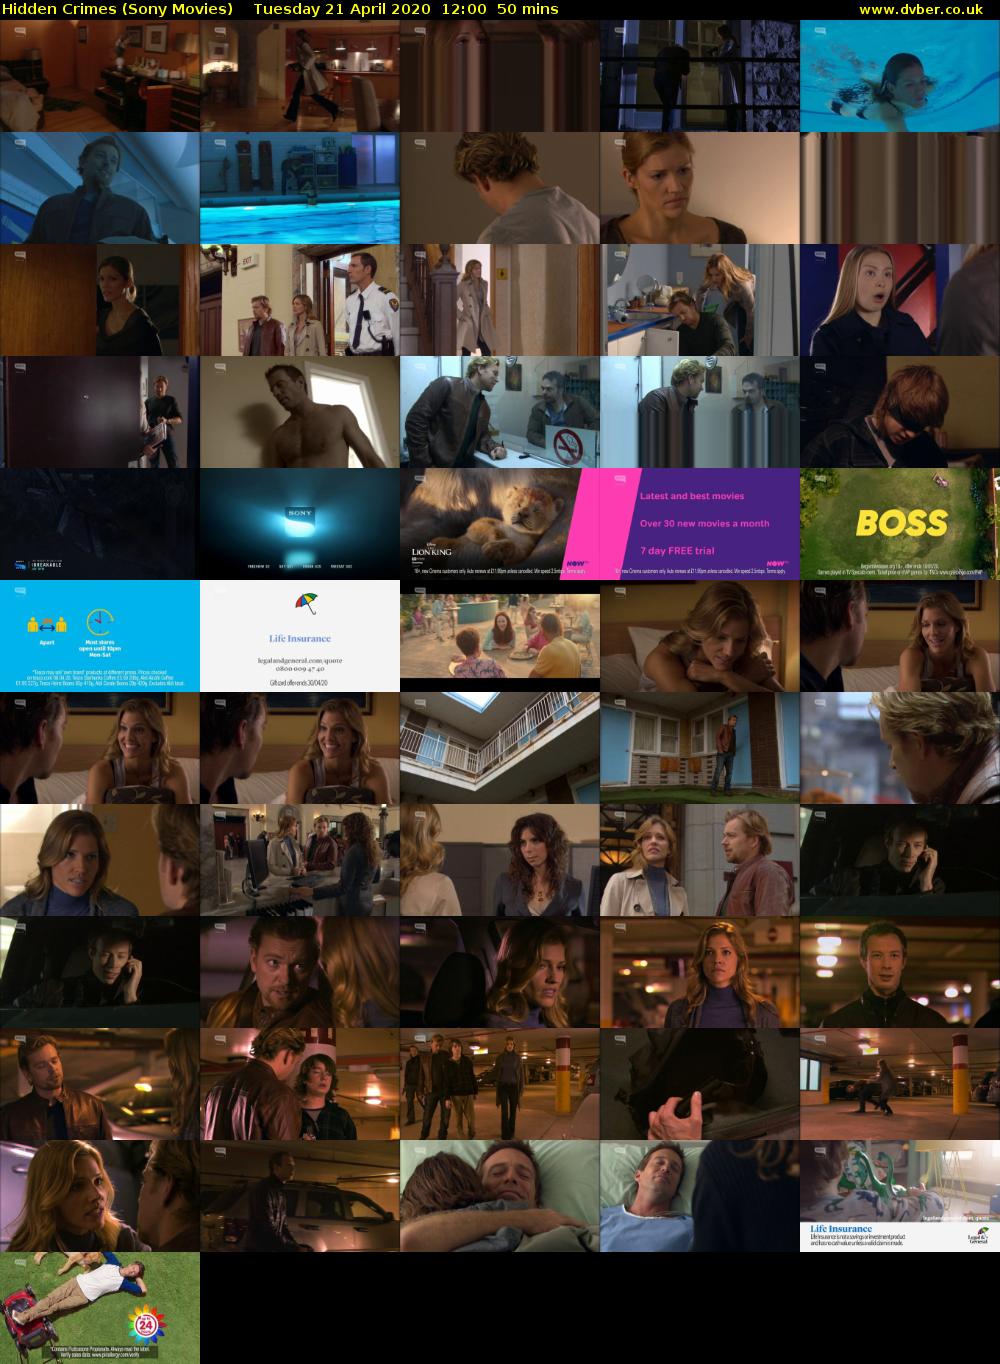 Hidden Crimes (Sony Movies) Tuesday 21 April 2020 12:00 - 12:50